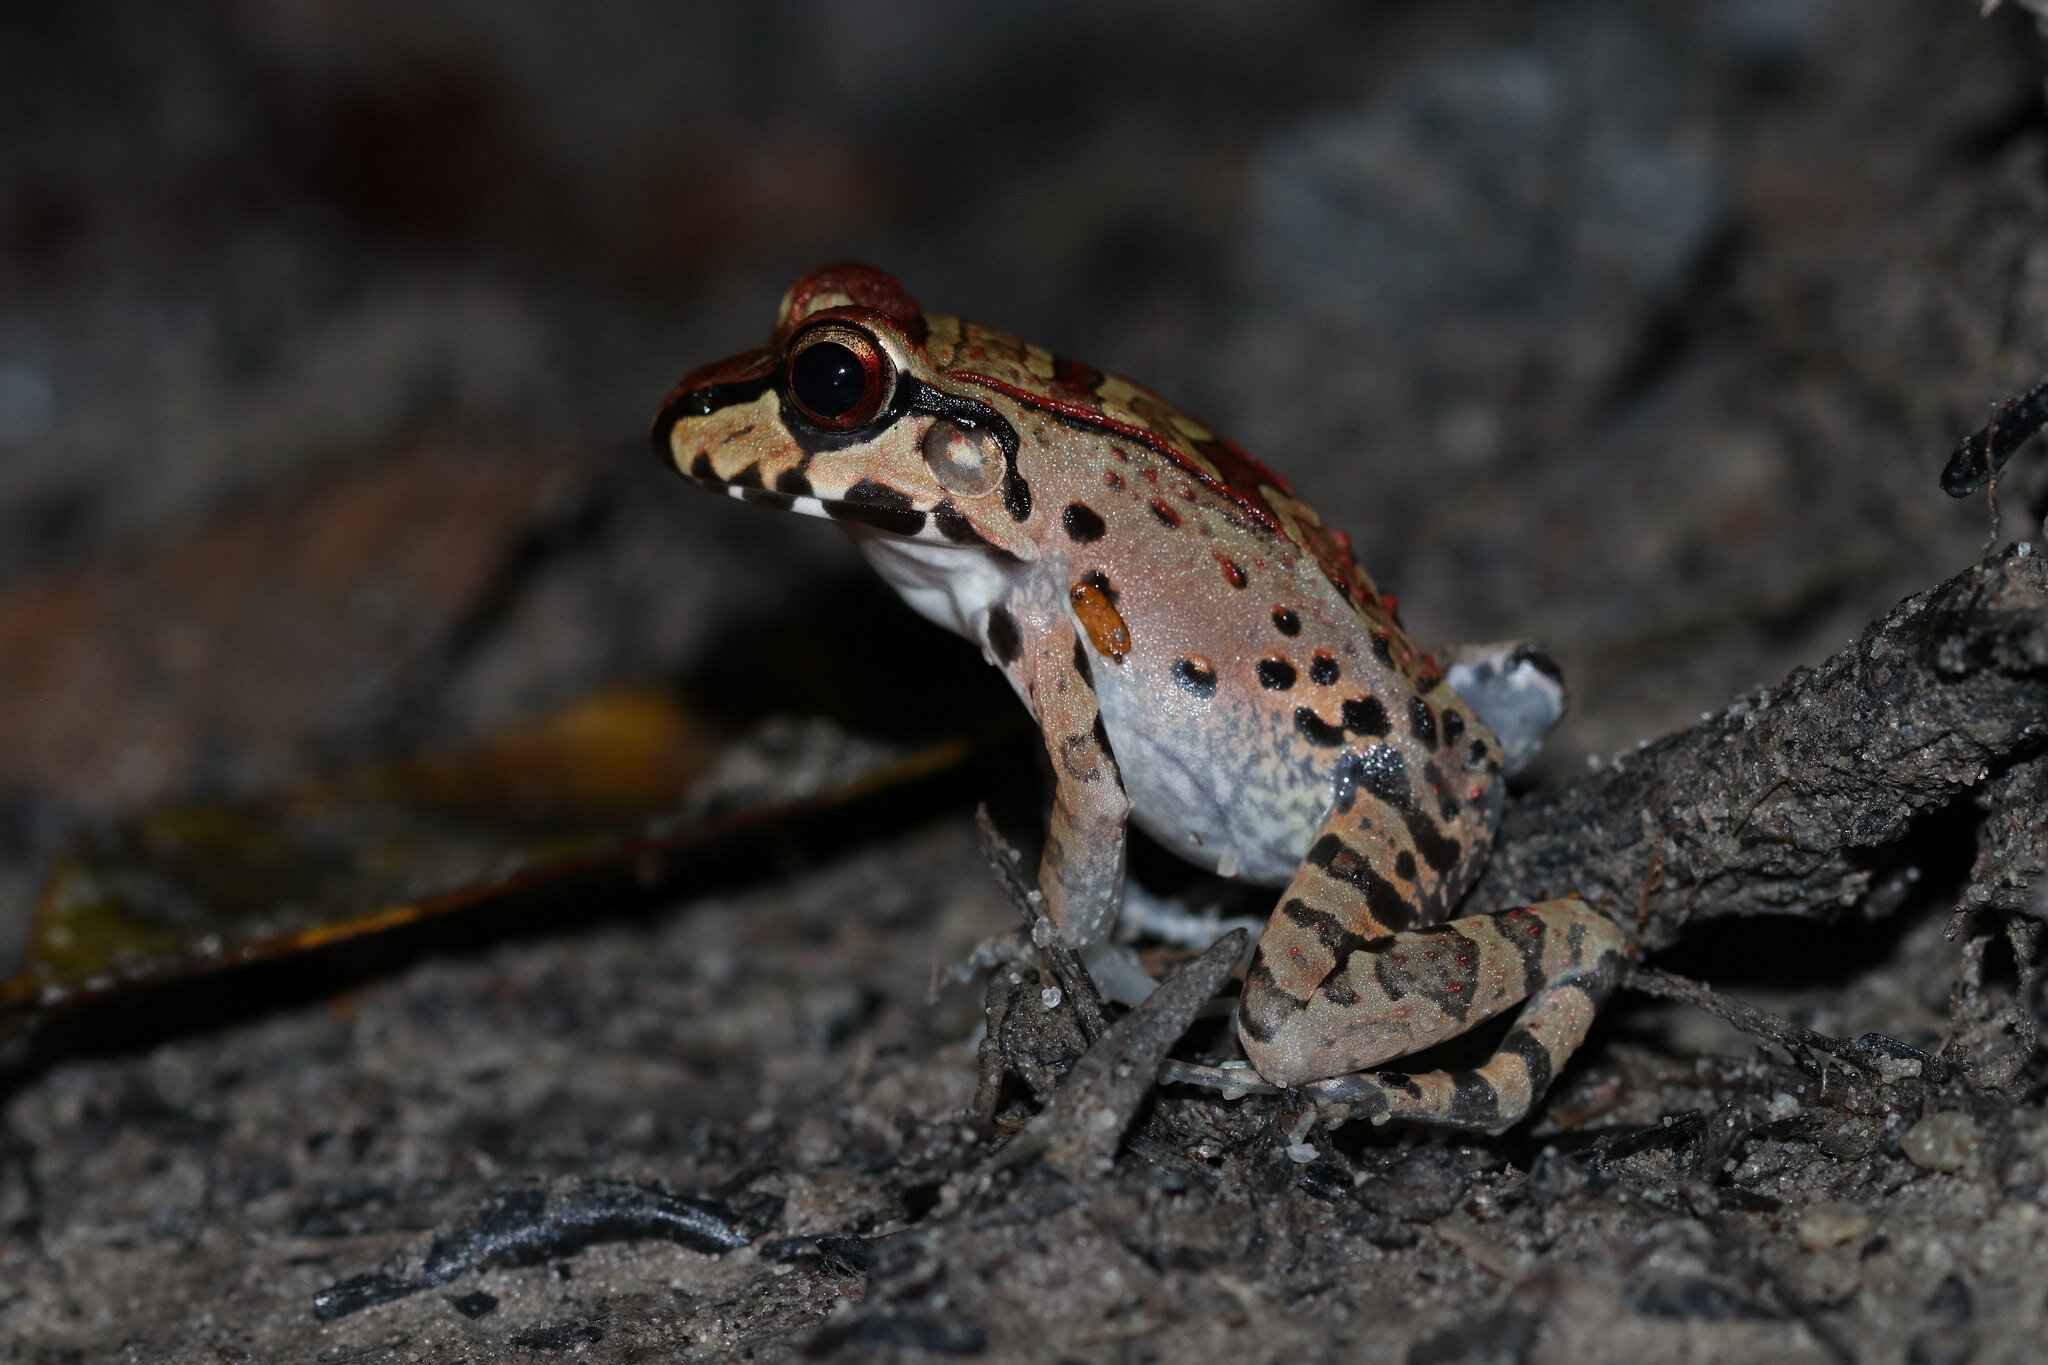 Leptodactylus sp. frog